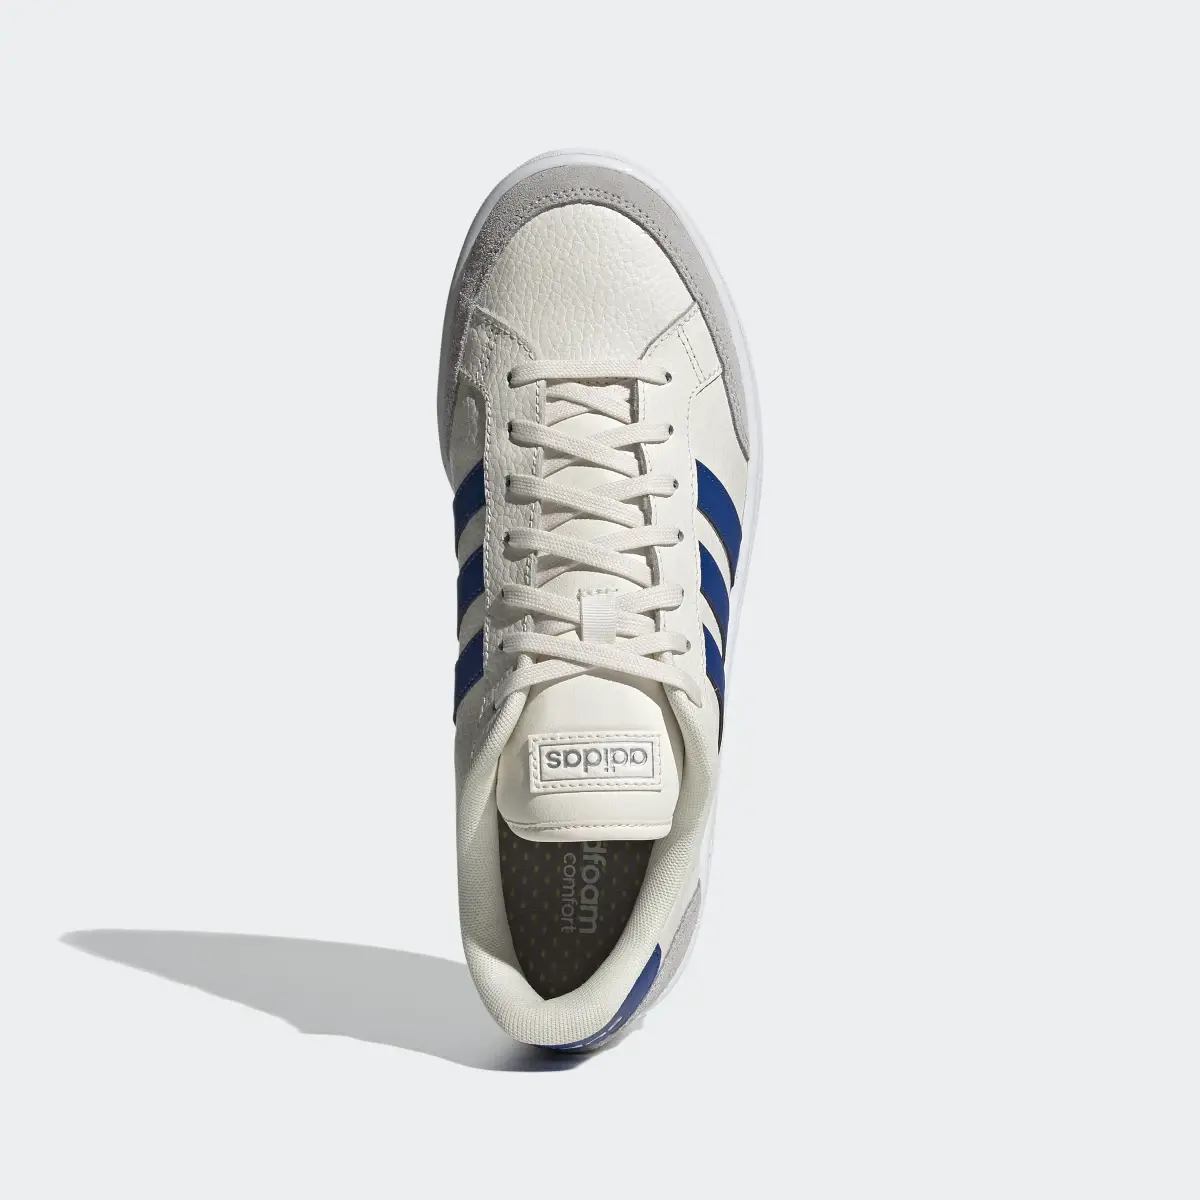 Adidas Grand Court SE Shoes. 3